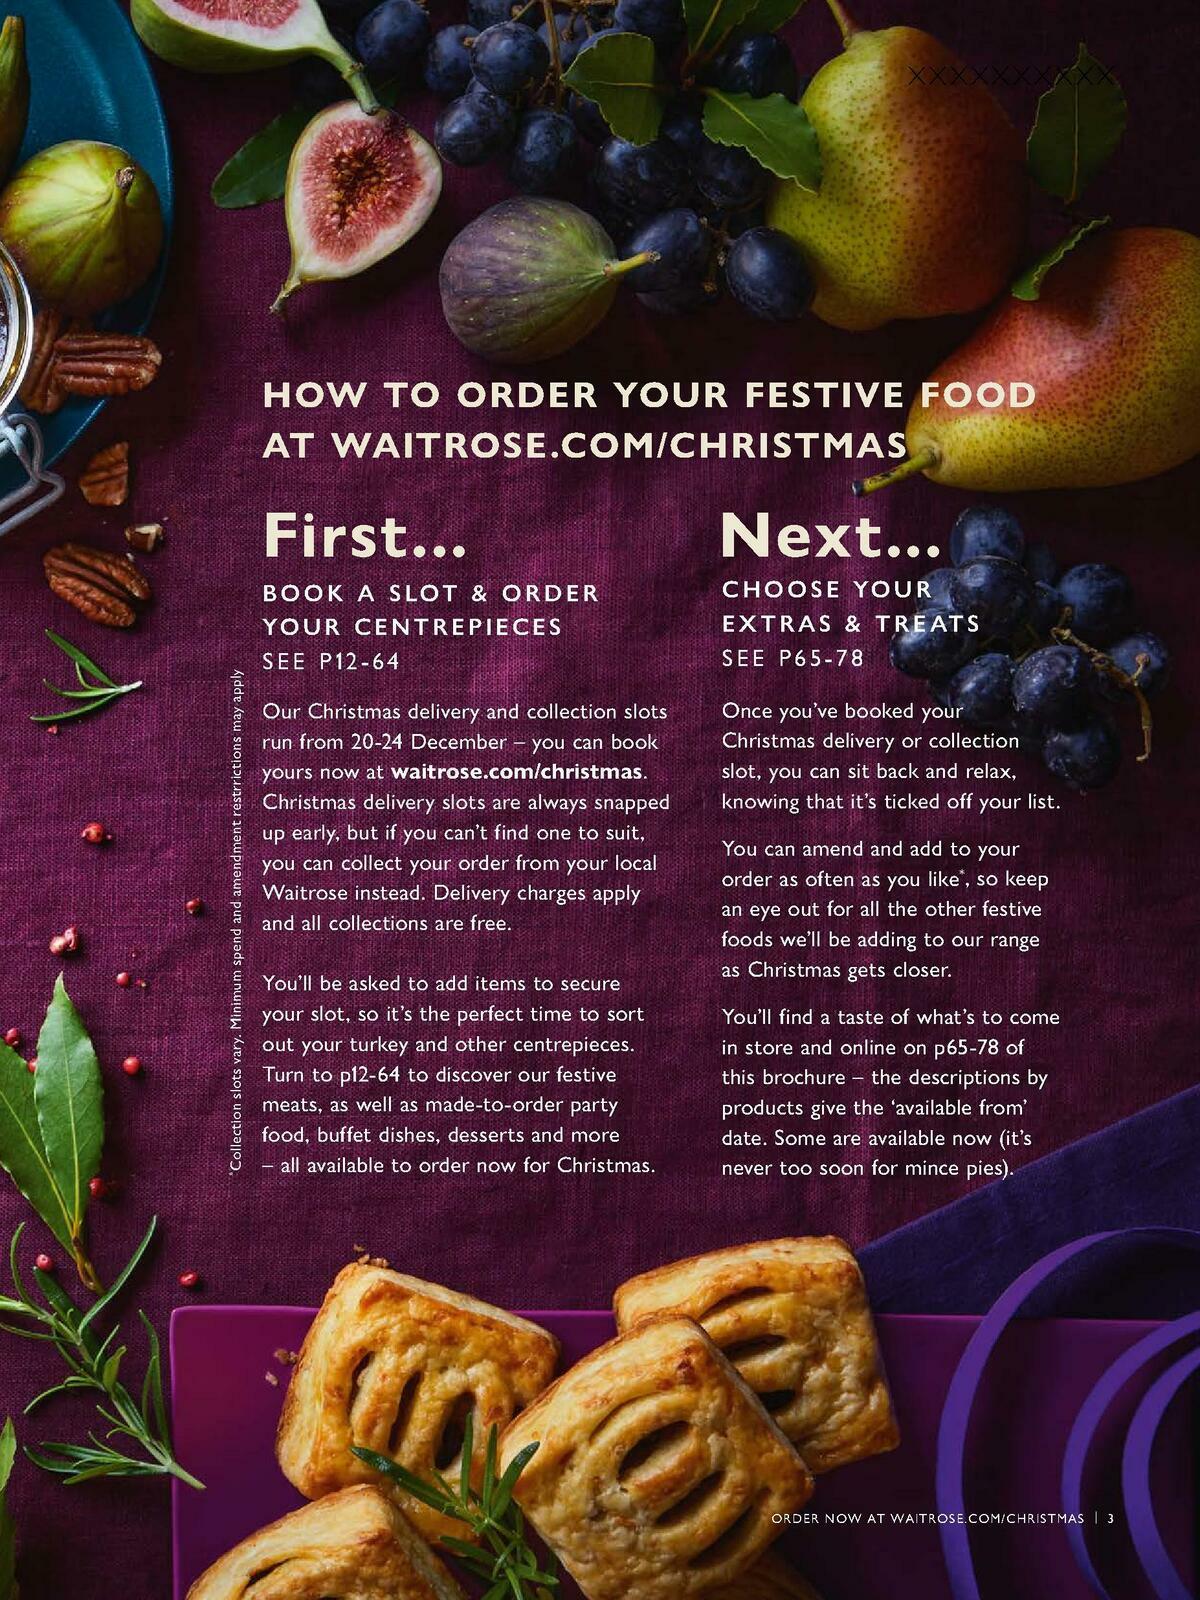 Waitrose Christmas Offers from 1 October